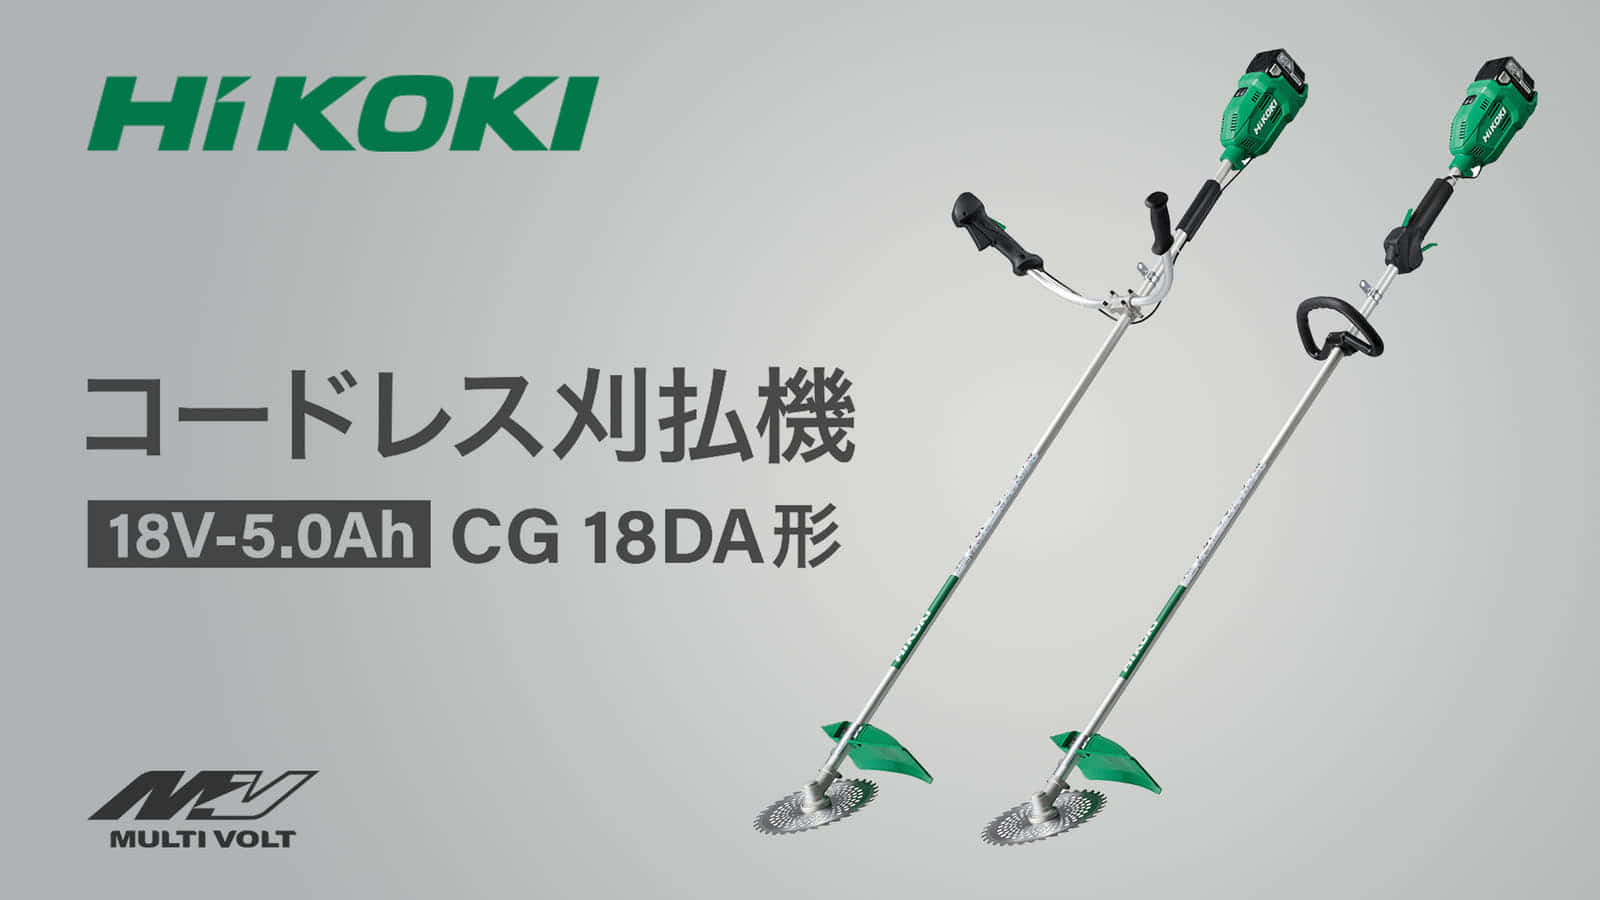 HiKOKI CG18DA コードレス刈払機を発売、低価格な18Vモデル